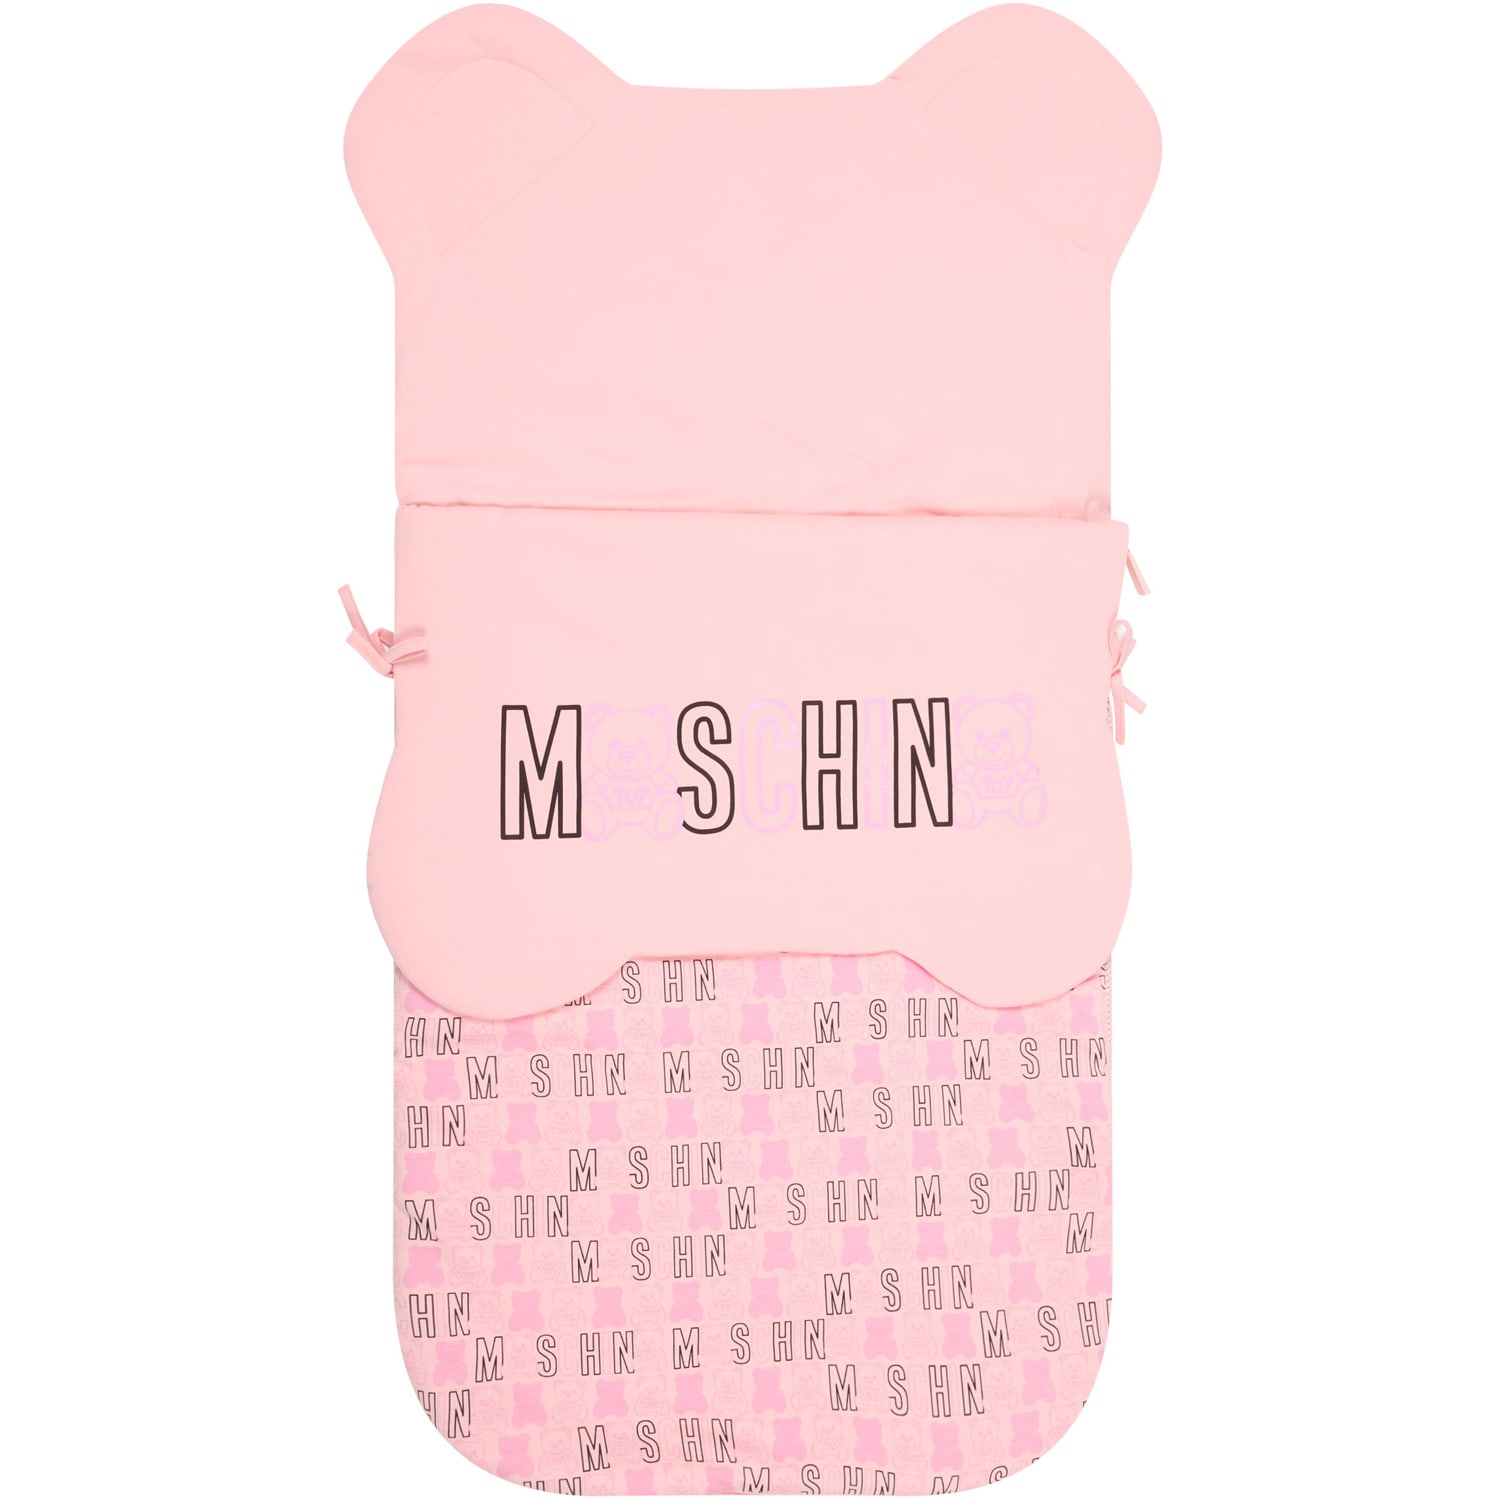 Moschino Pink Sleeping Bag For Baby Girl With Logos